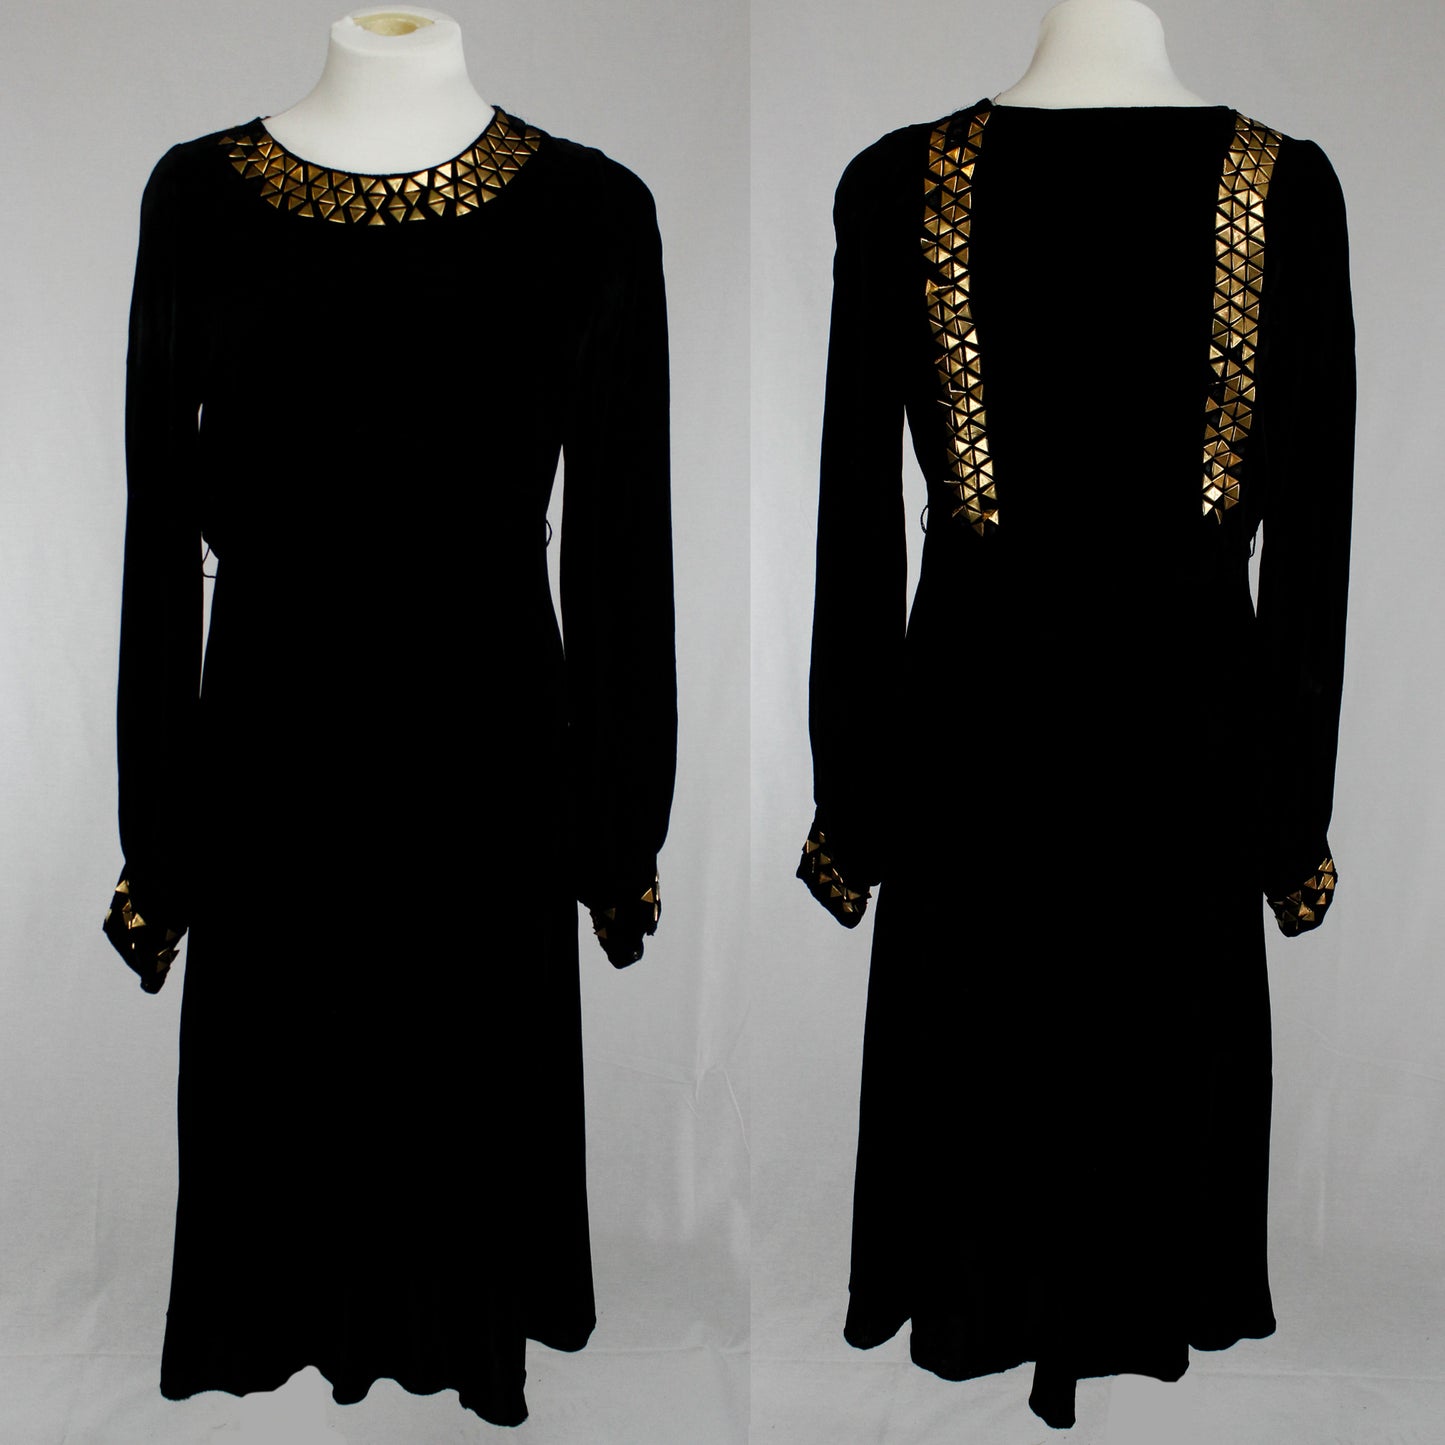 Vintage 1940's Black Dress With Studs